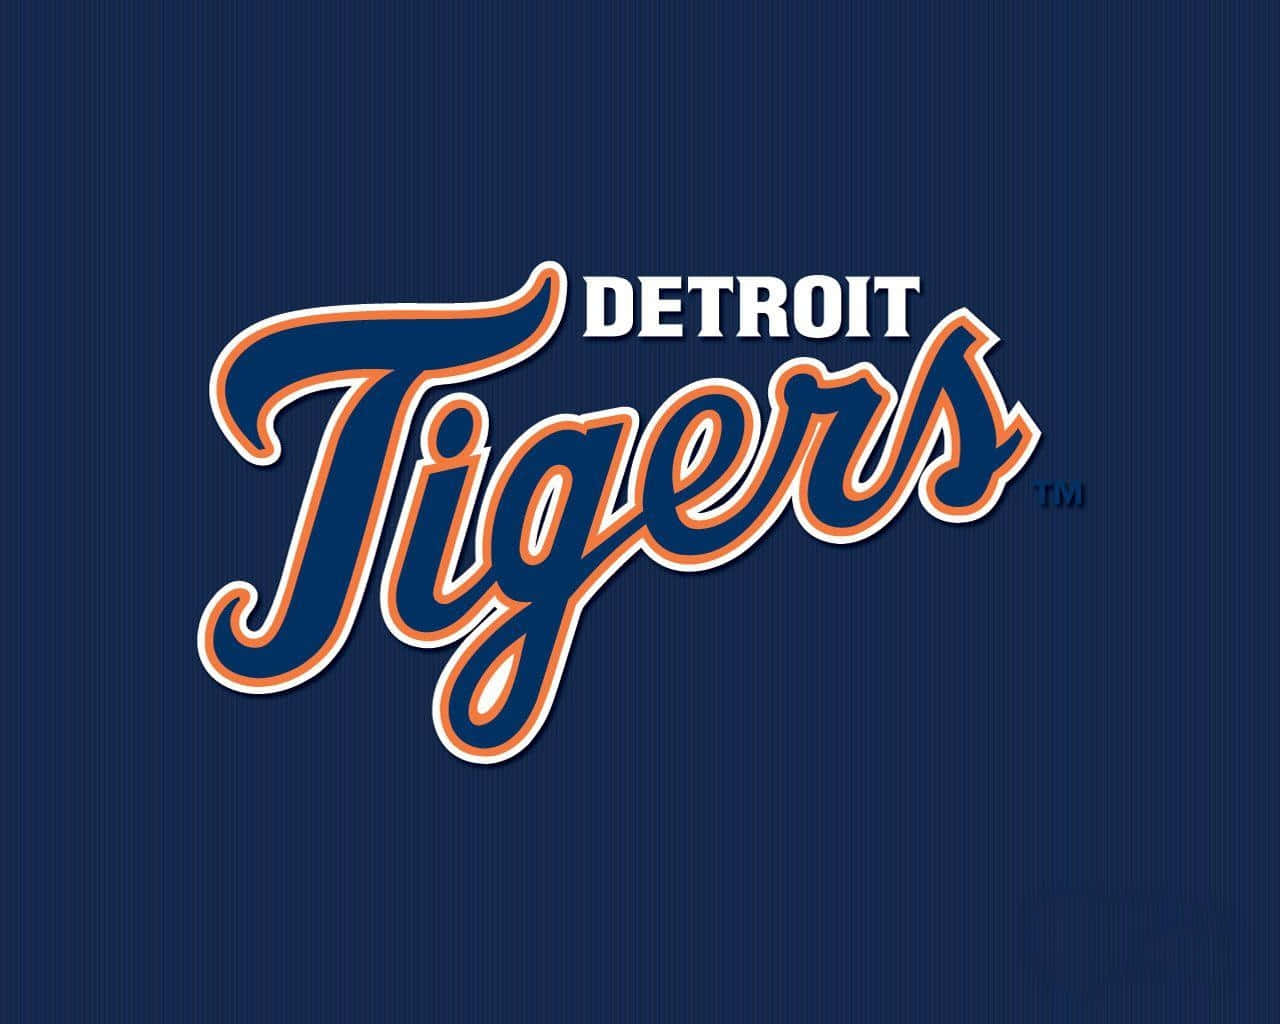 Detroittigers-logotypen På En Blå Bakgrund. Wallpaper